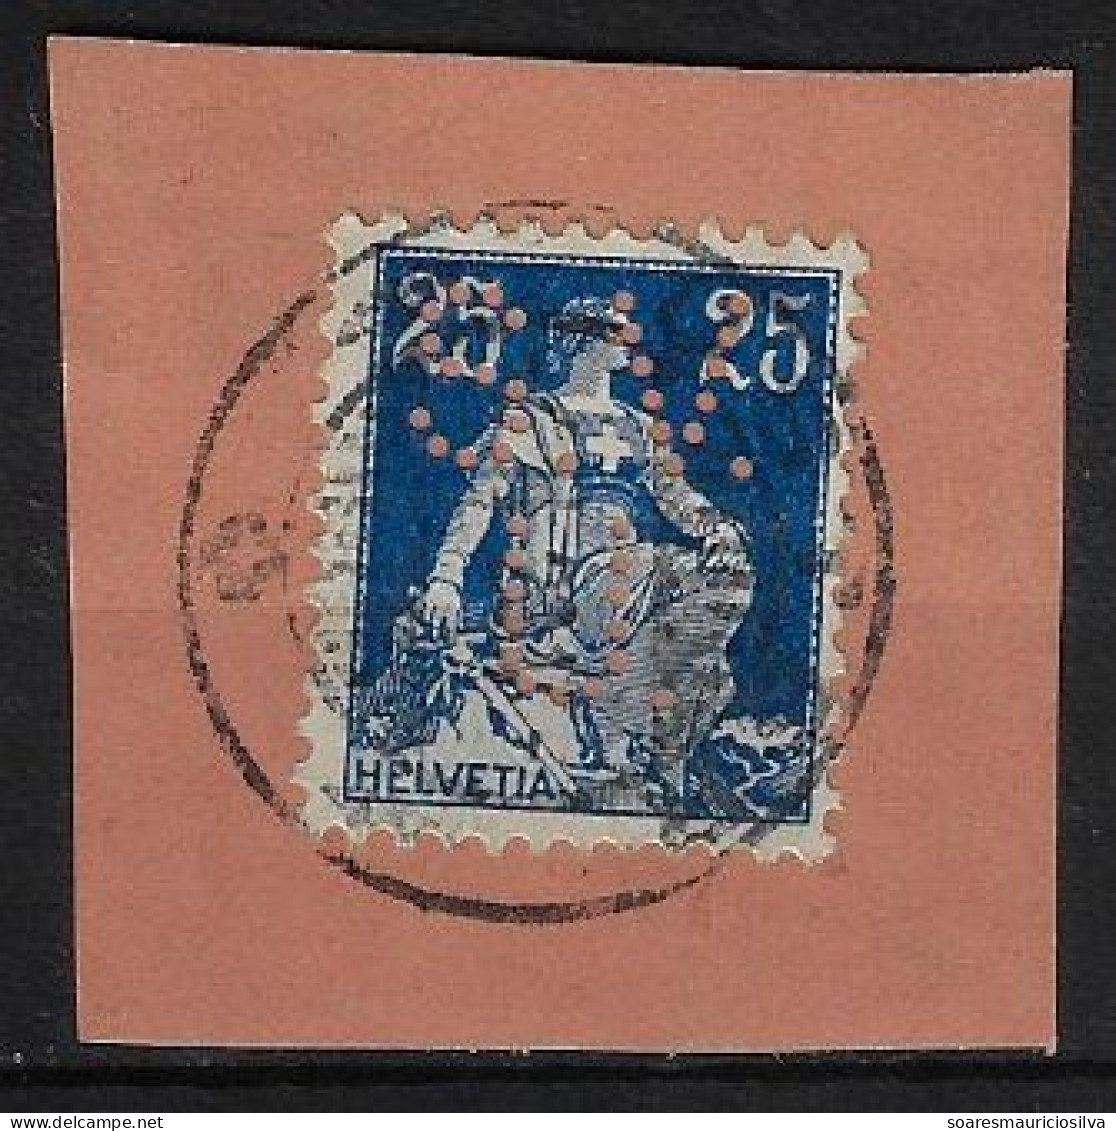 Switzerland 1904/1931 Cover Fragment Stamp With Perfin S.V./U. By Schweizerische Volksbank From Ulster Lochung Perfore - Perforadas